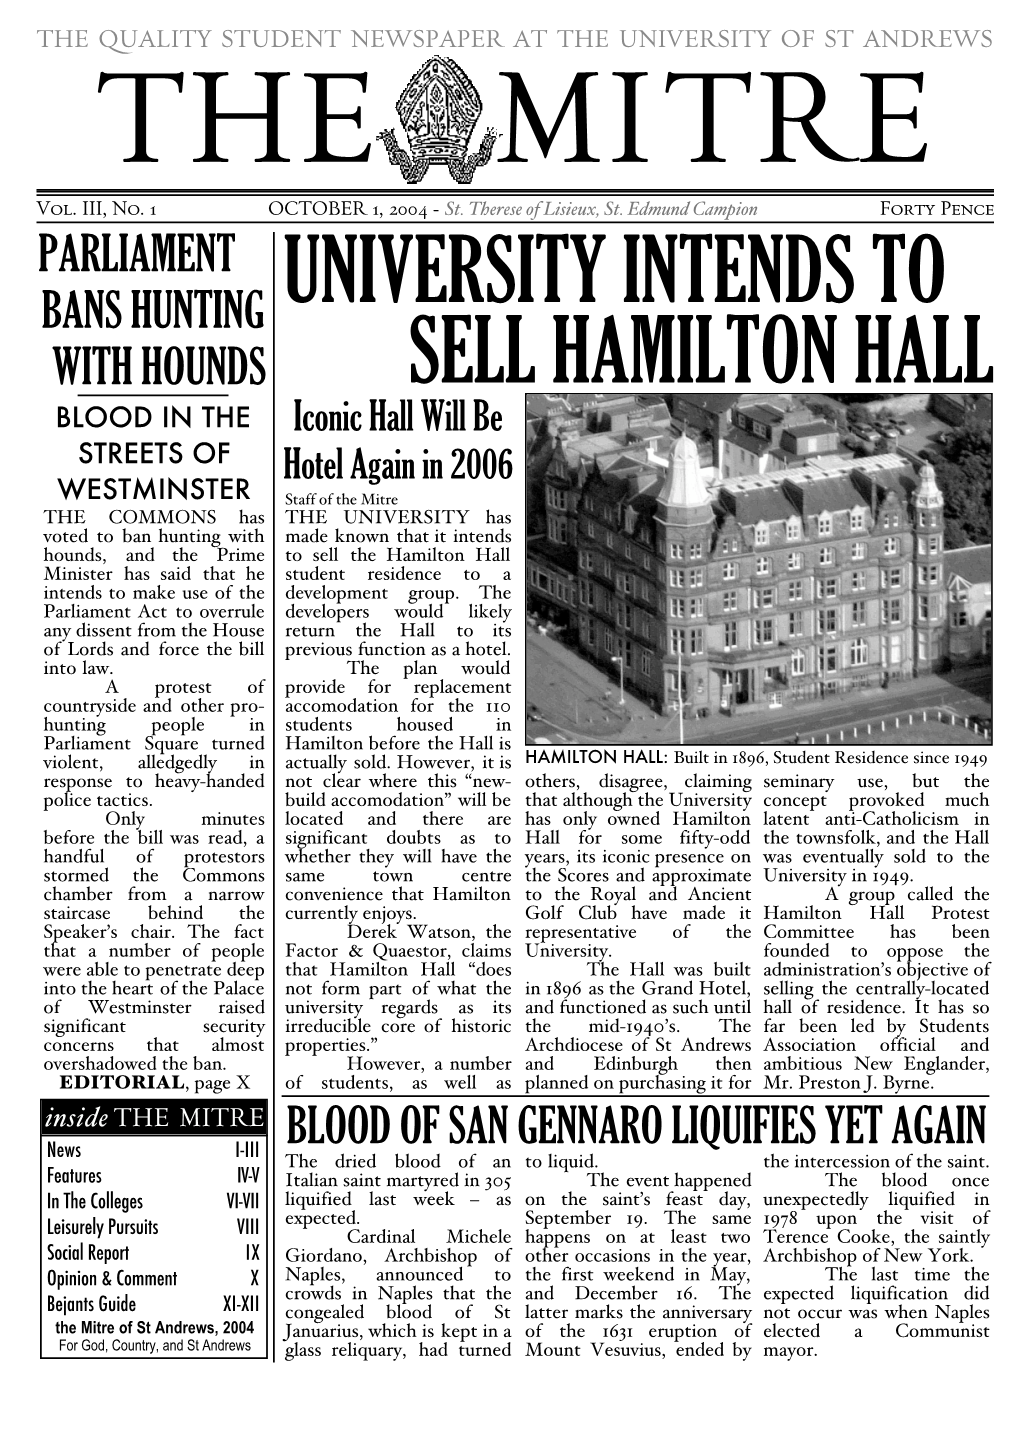 University Intends to Sell Hamilton Hall